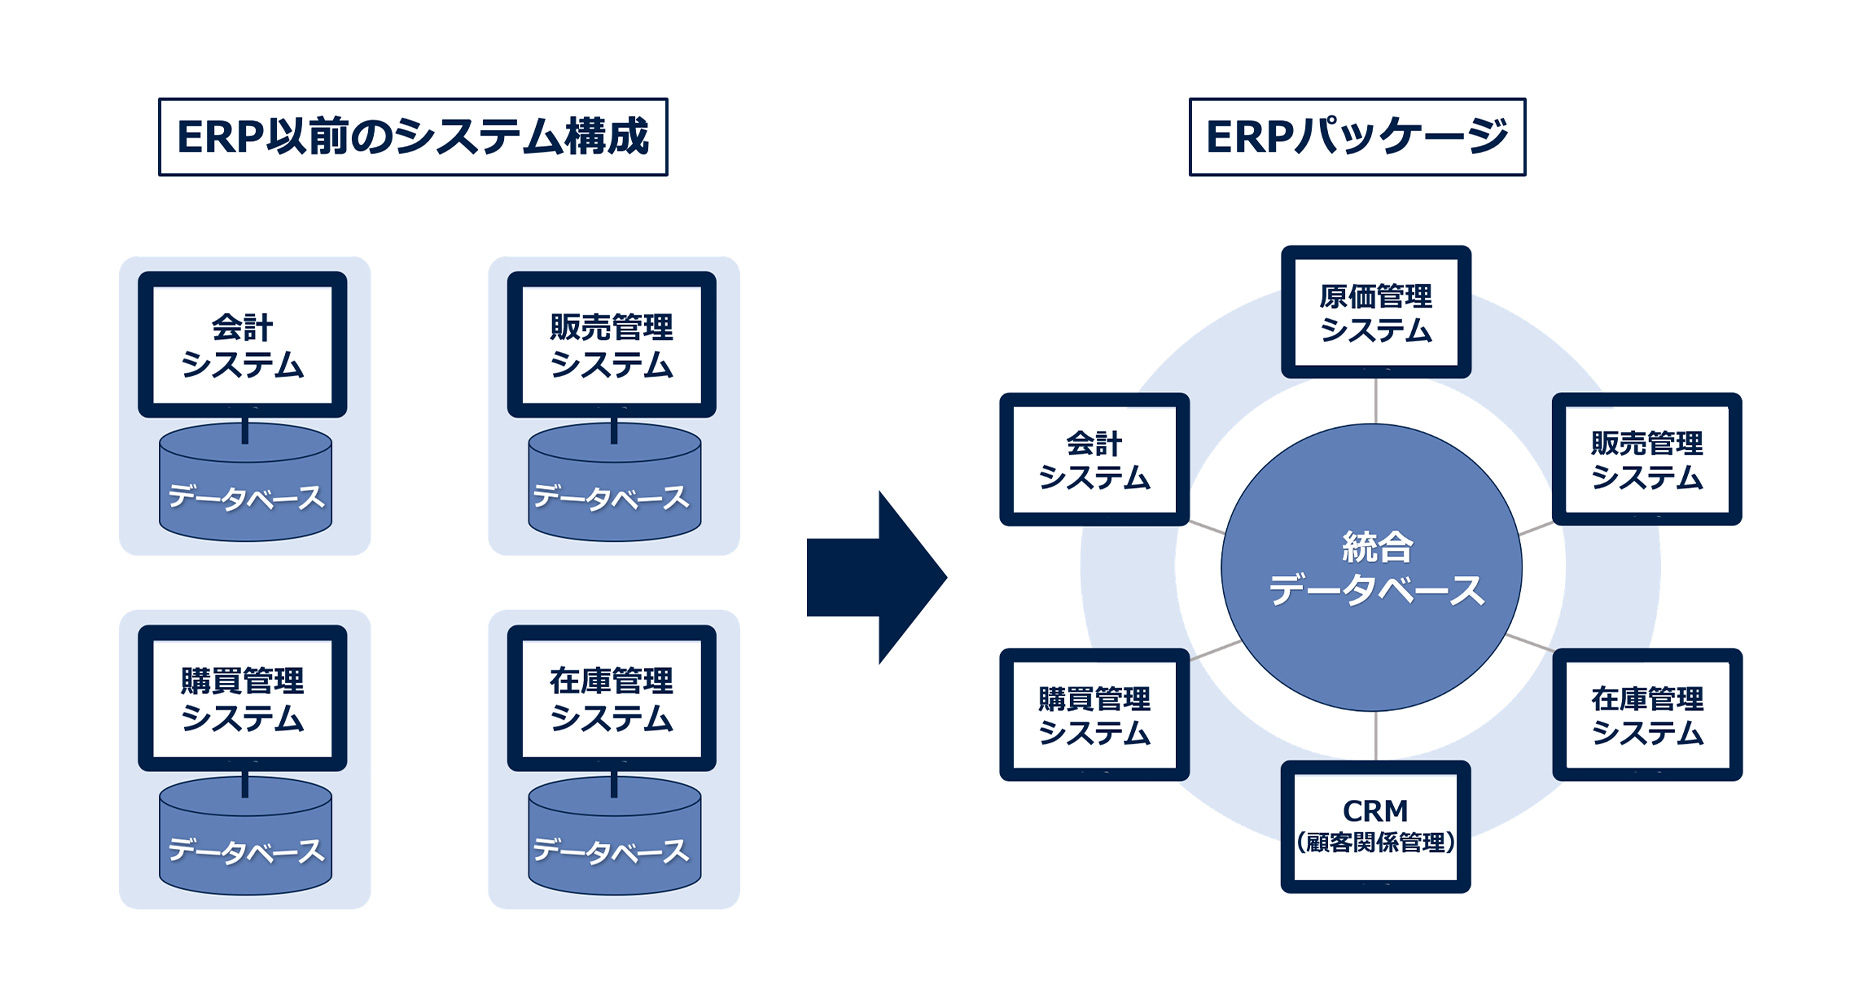 ERP以前の情報システムとERPパッケージ